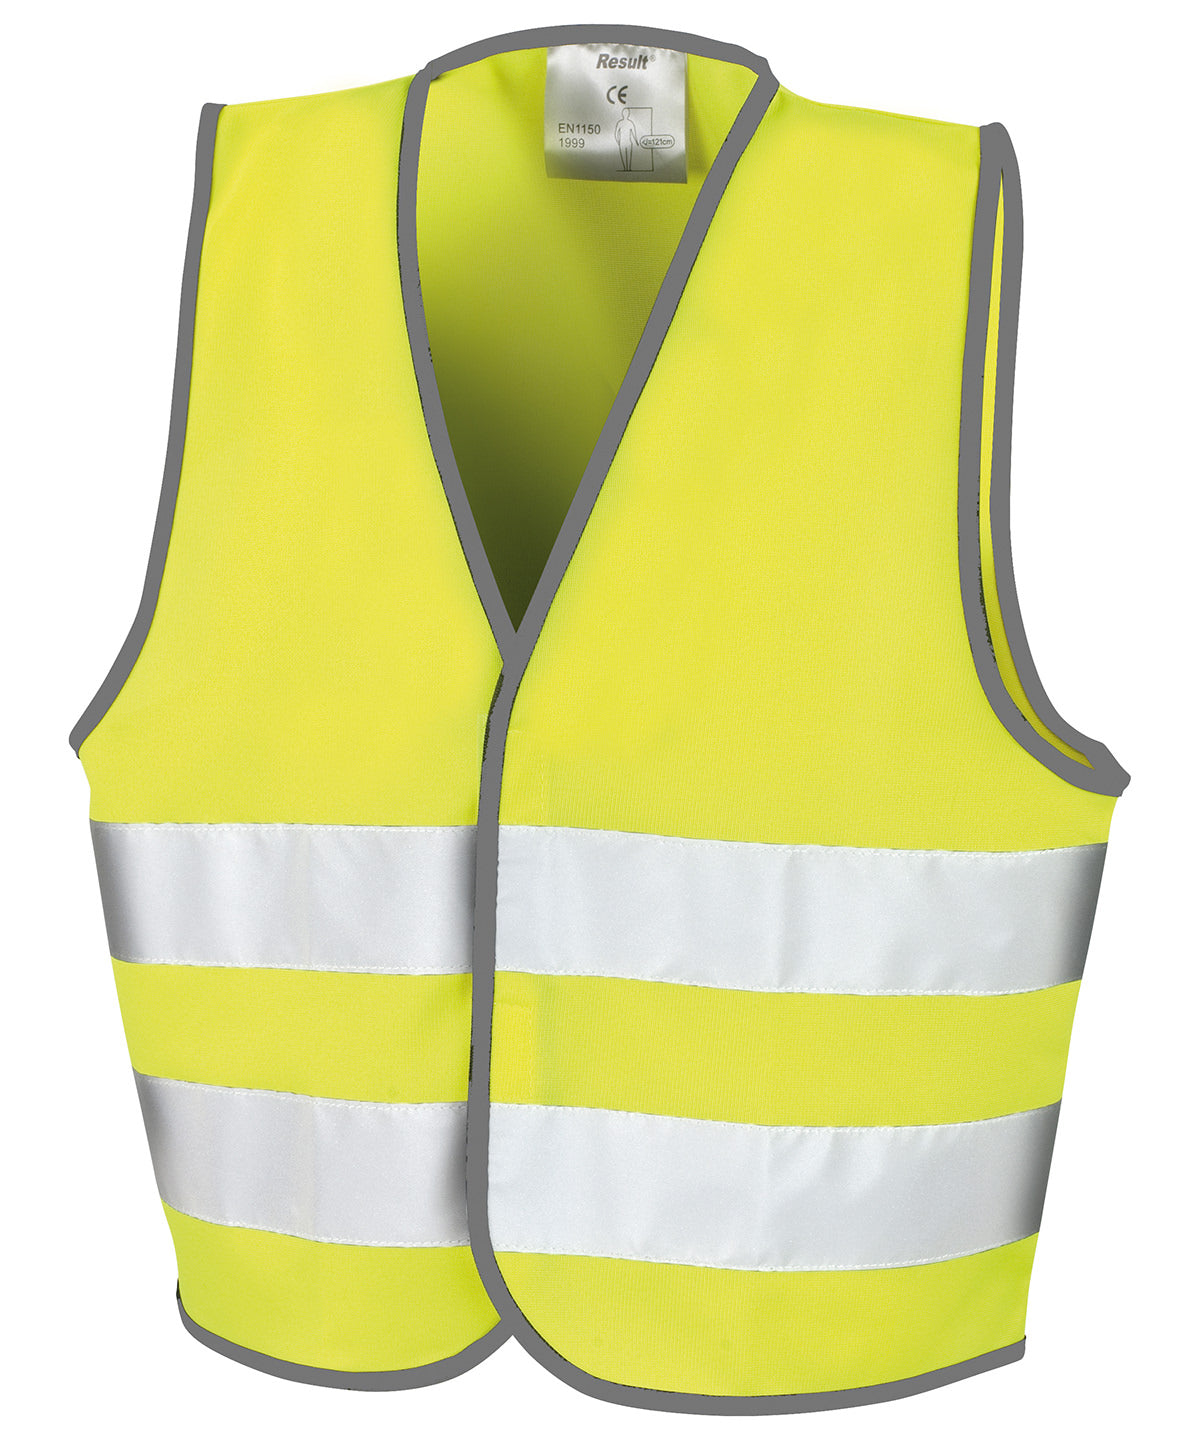 Öryggisvesti - Core Junior Safety Vest